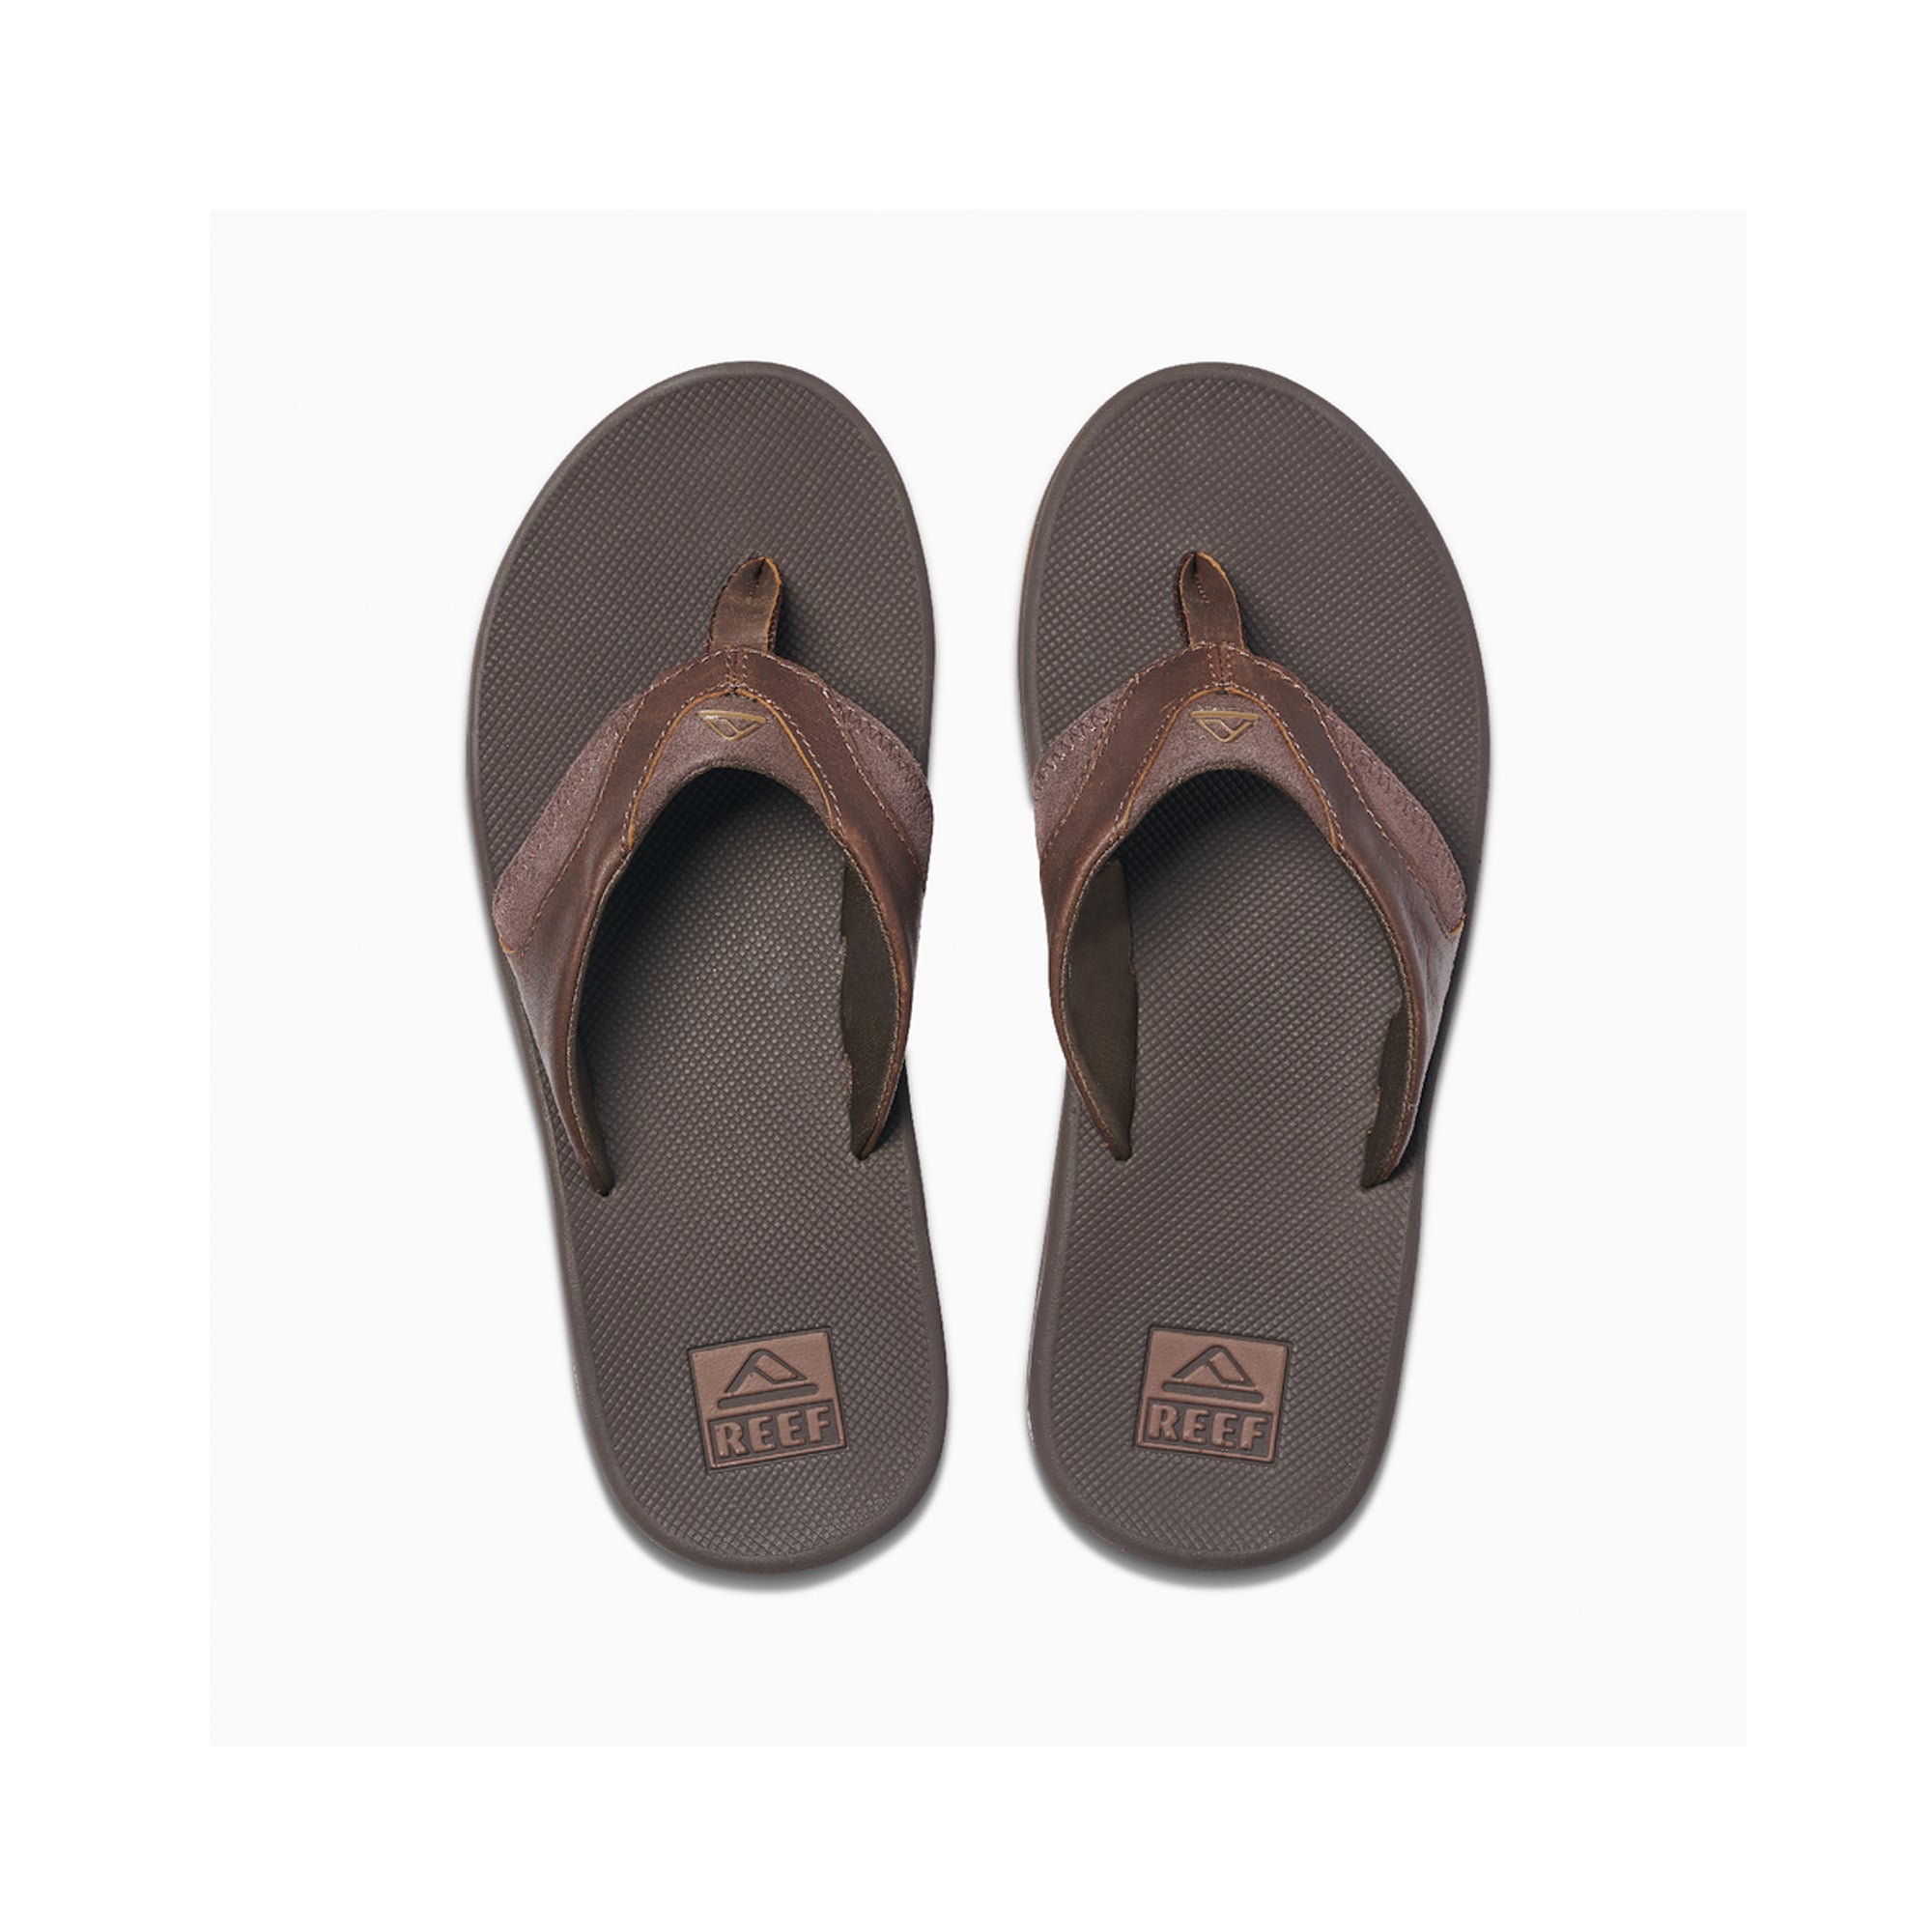 Reef Leather Fanning Men's Sandals